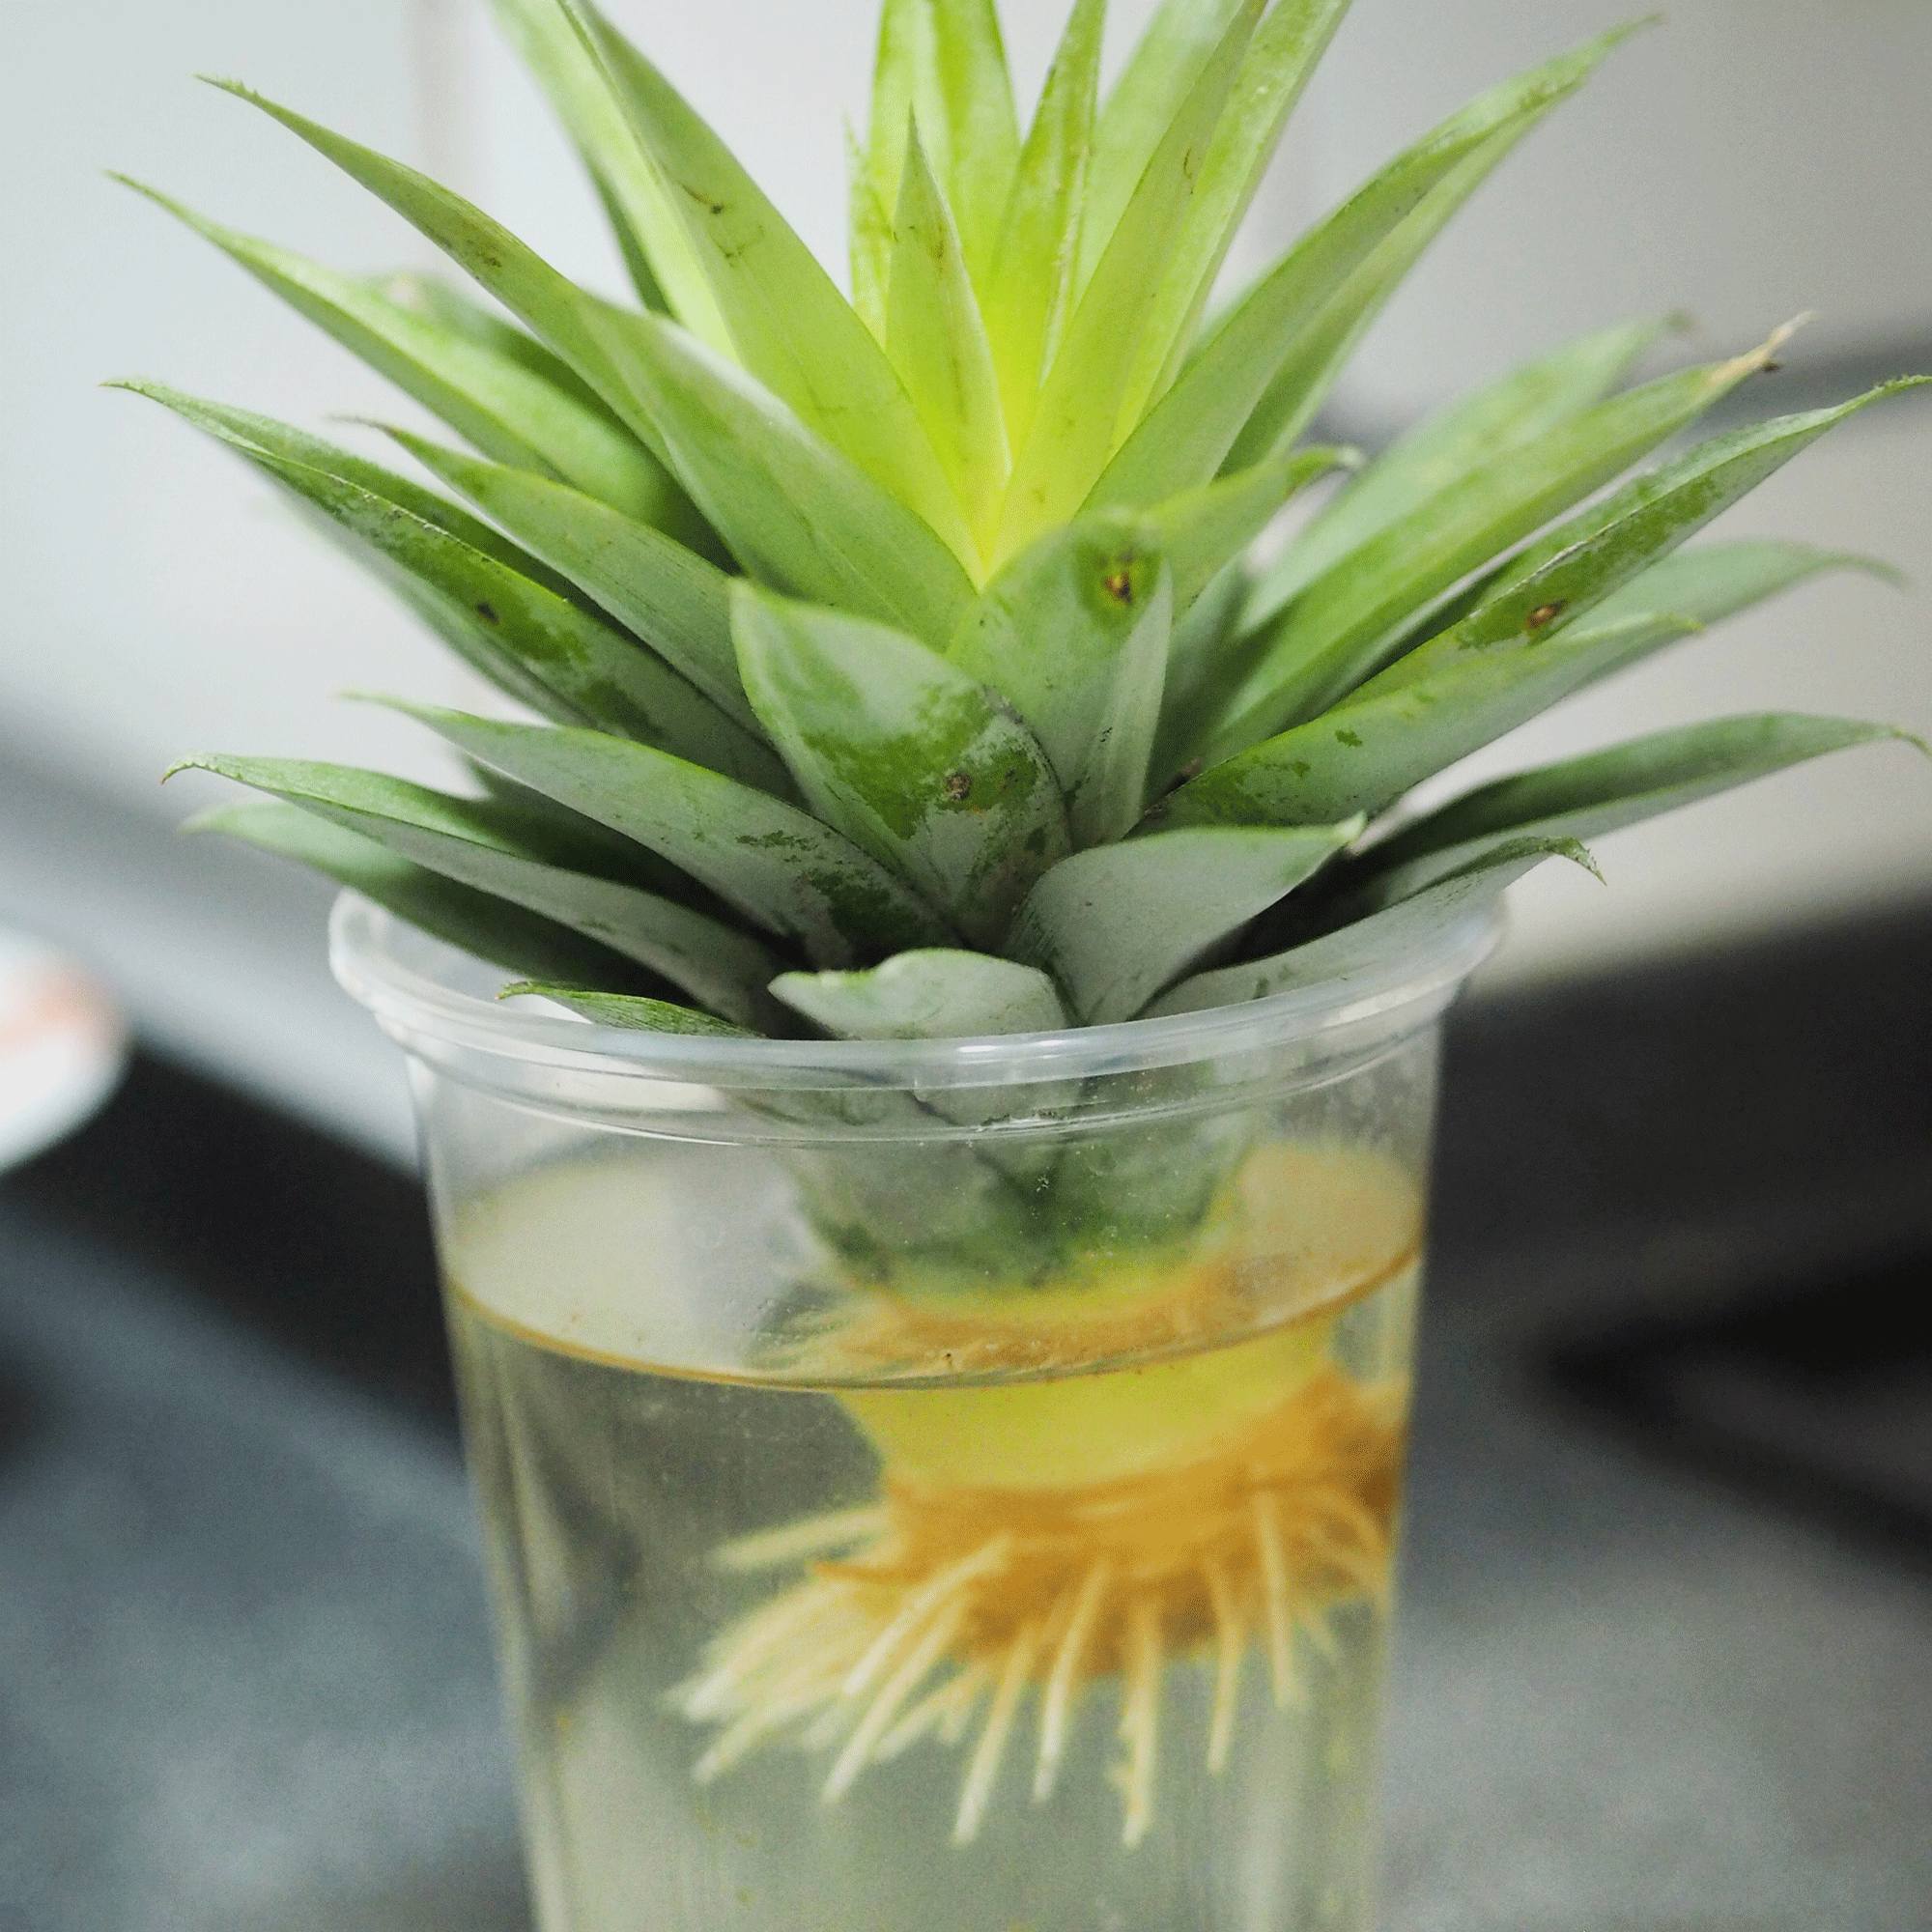 Pineapple top growing in water glass